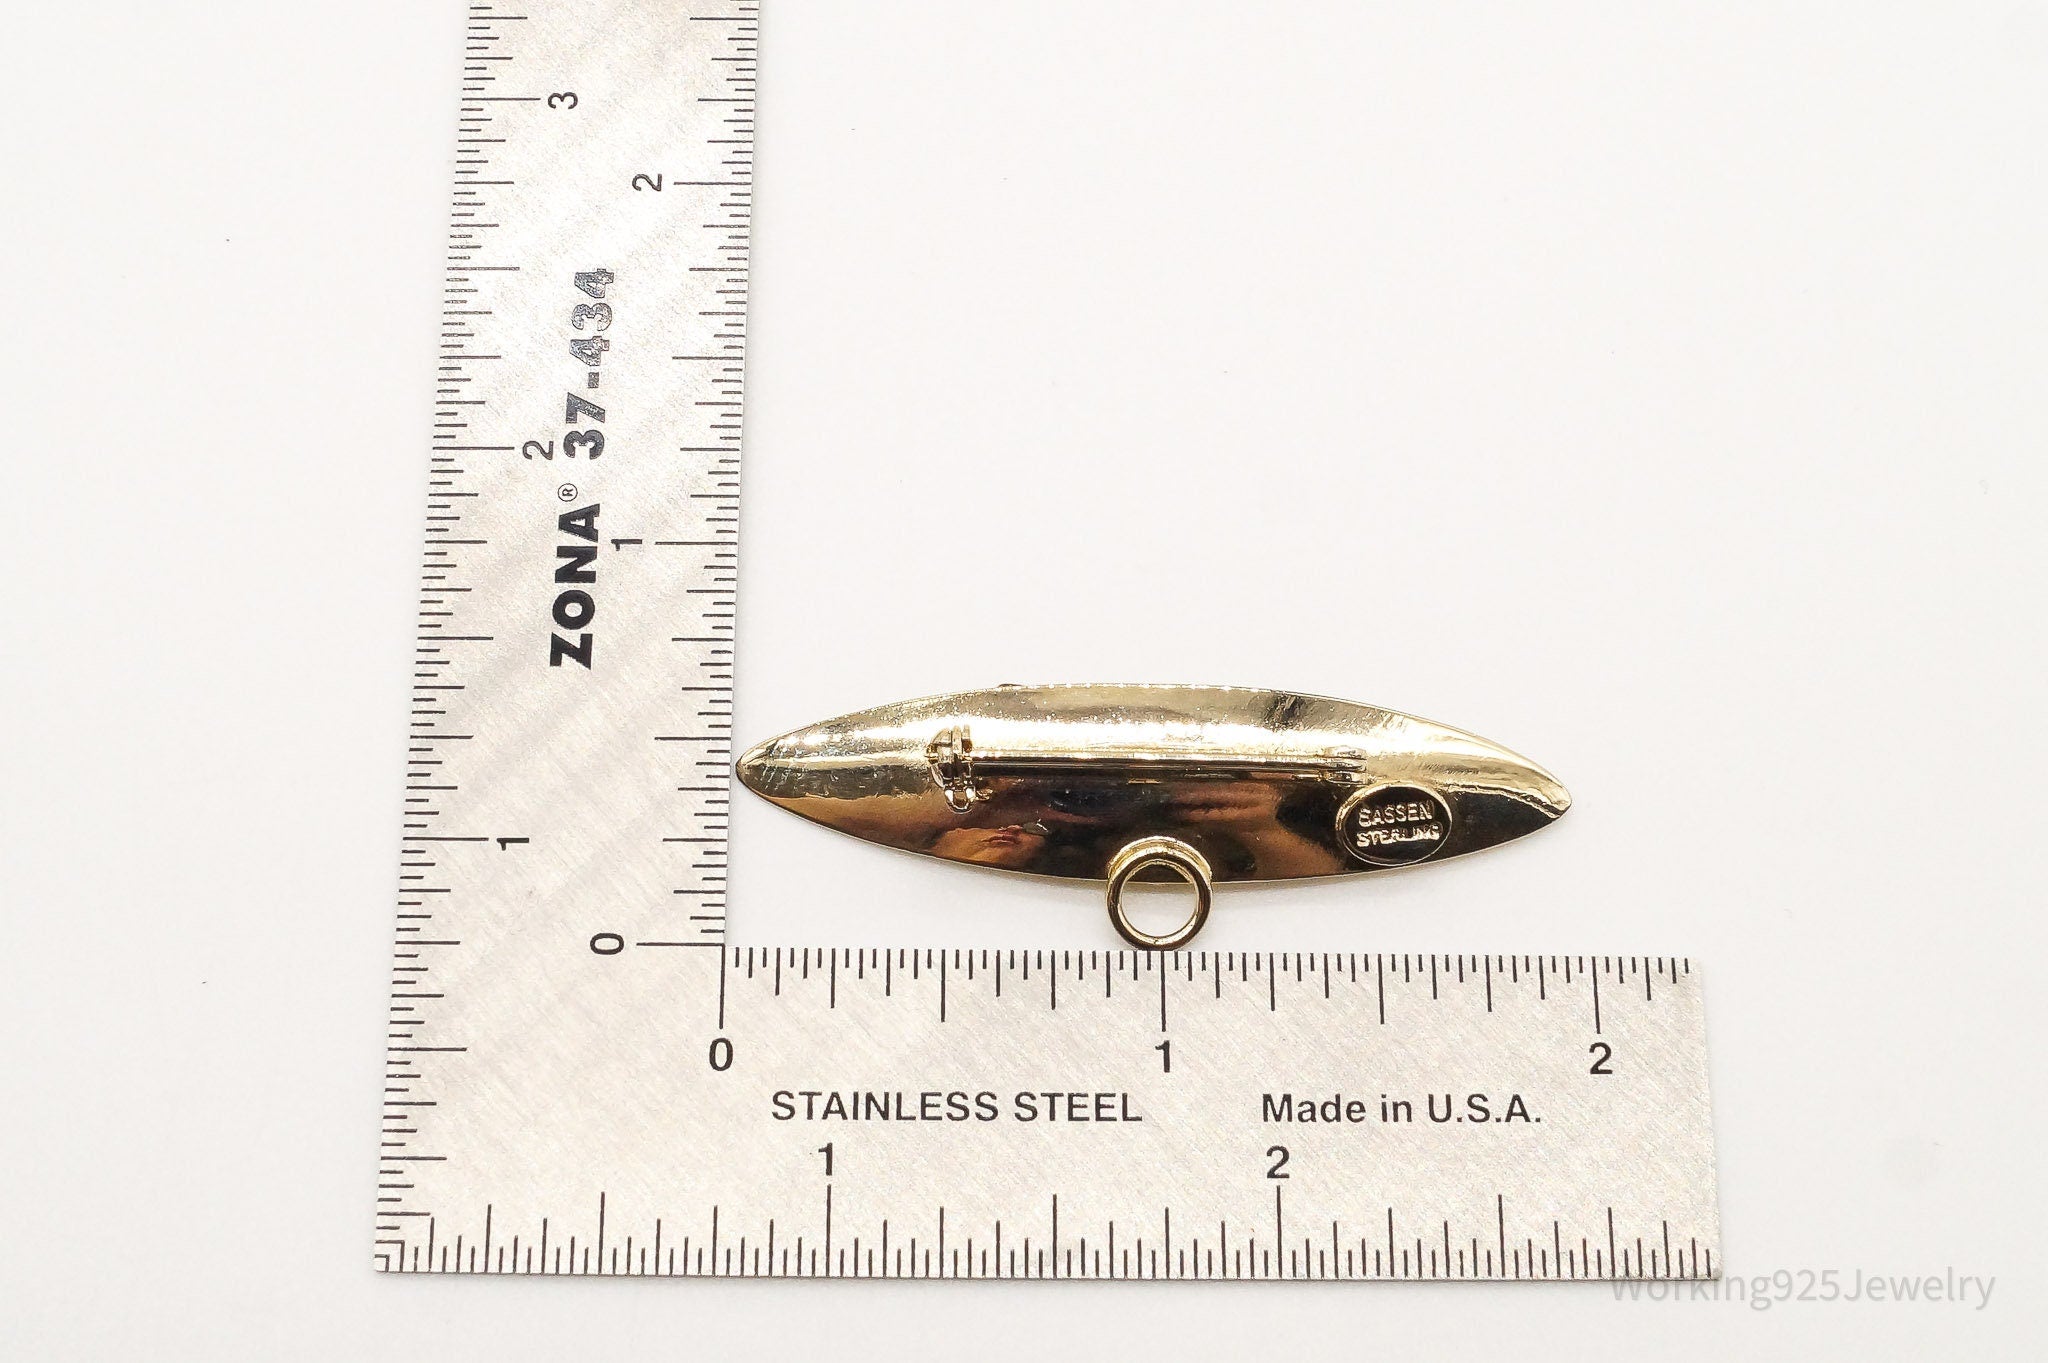 1940s Vintage Designer Sassen Gold Vermeil Sterling Silver Brooch Pin